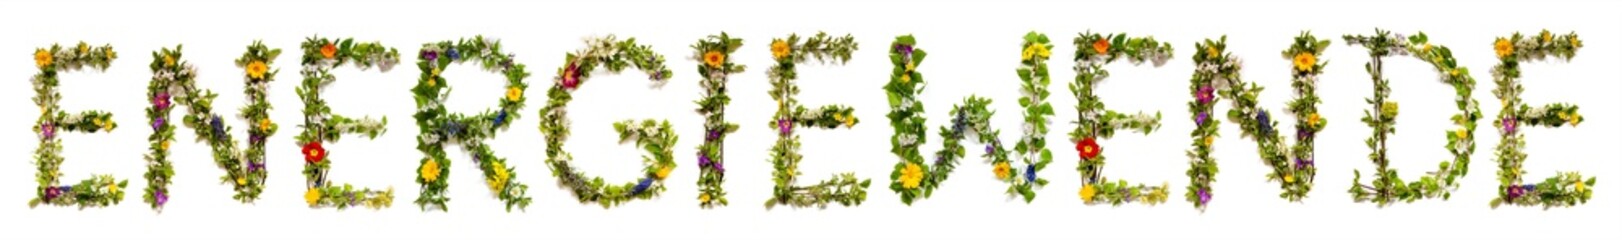 Blooming Flower Letters Building German Word Energiewende Means Energy Transition